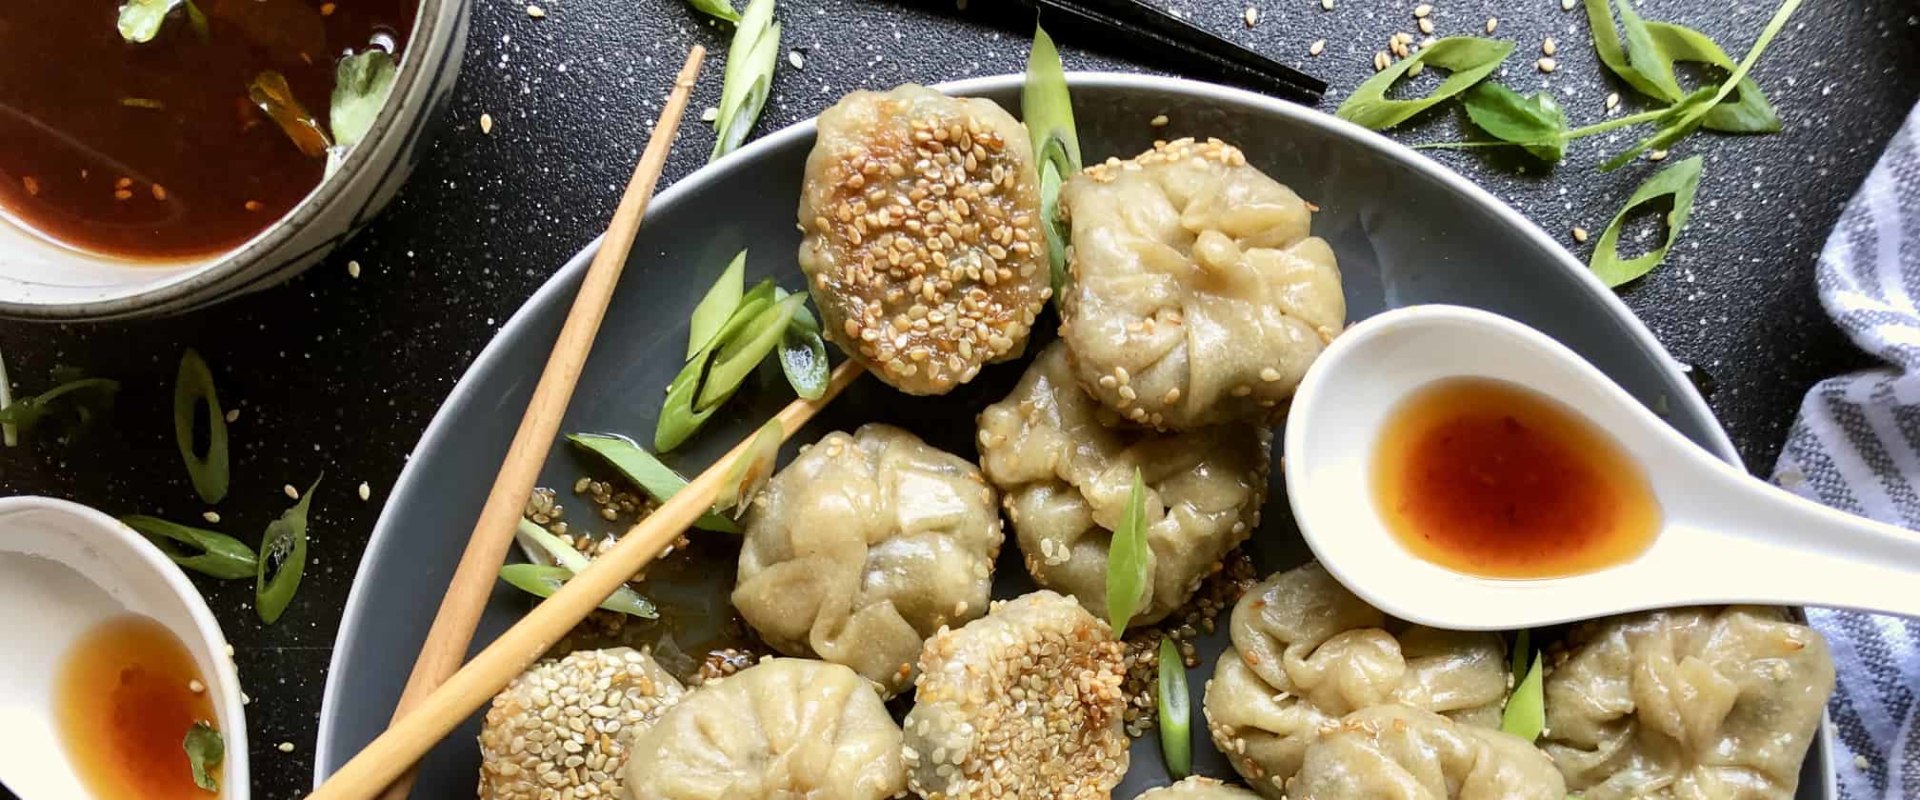 How to Make Delicious Mushroom Dumplings at Home